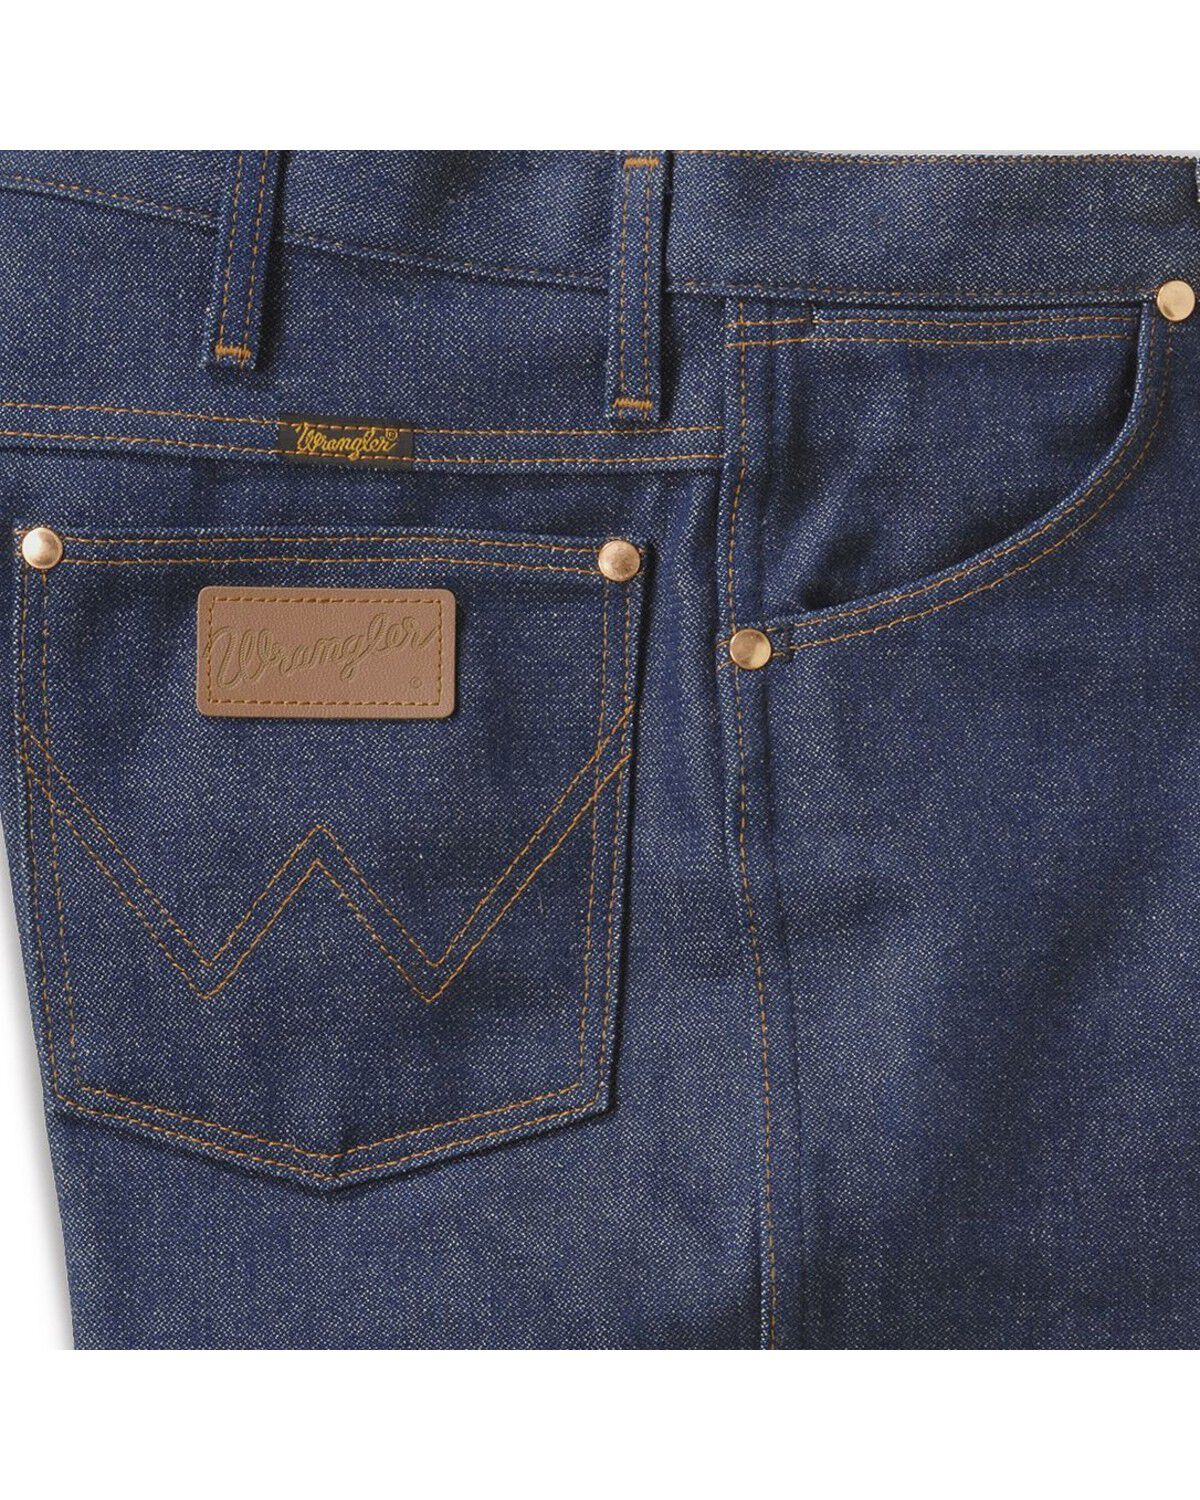 wrangler women's relaxed fit jeans